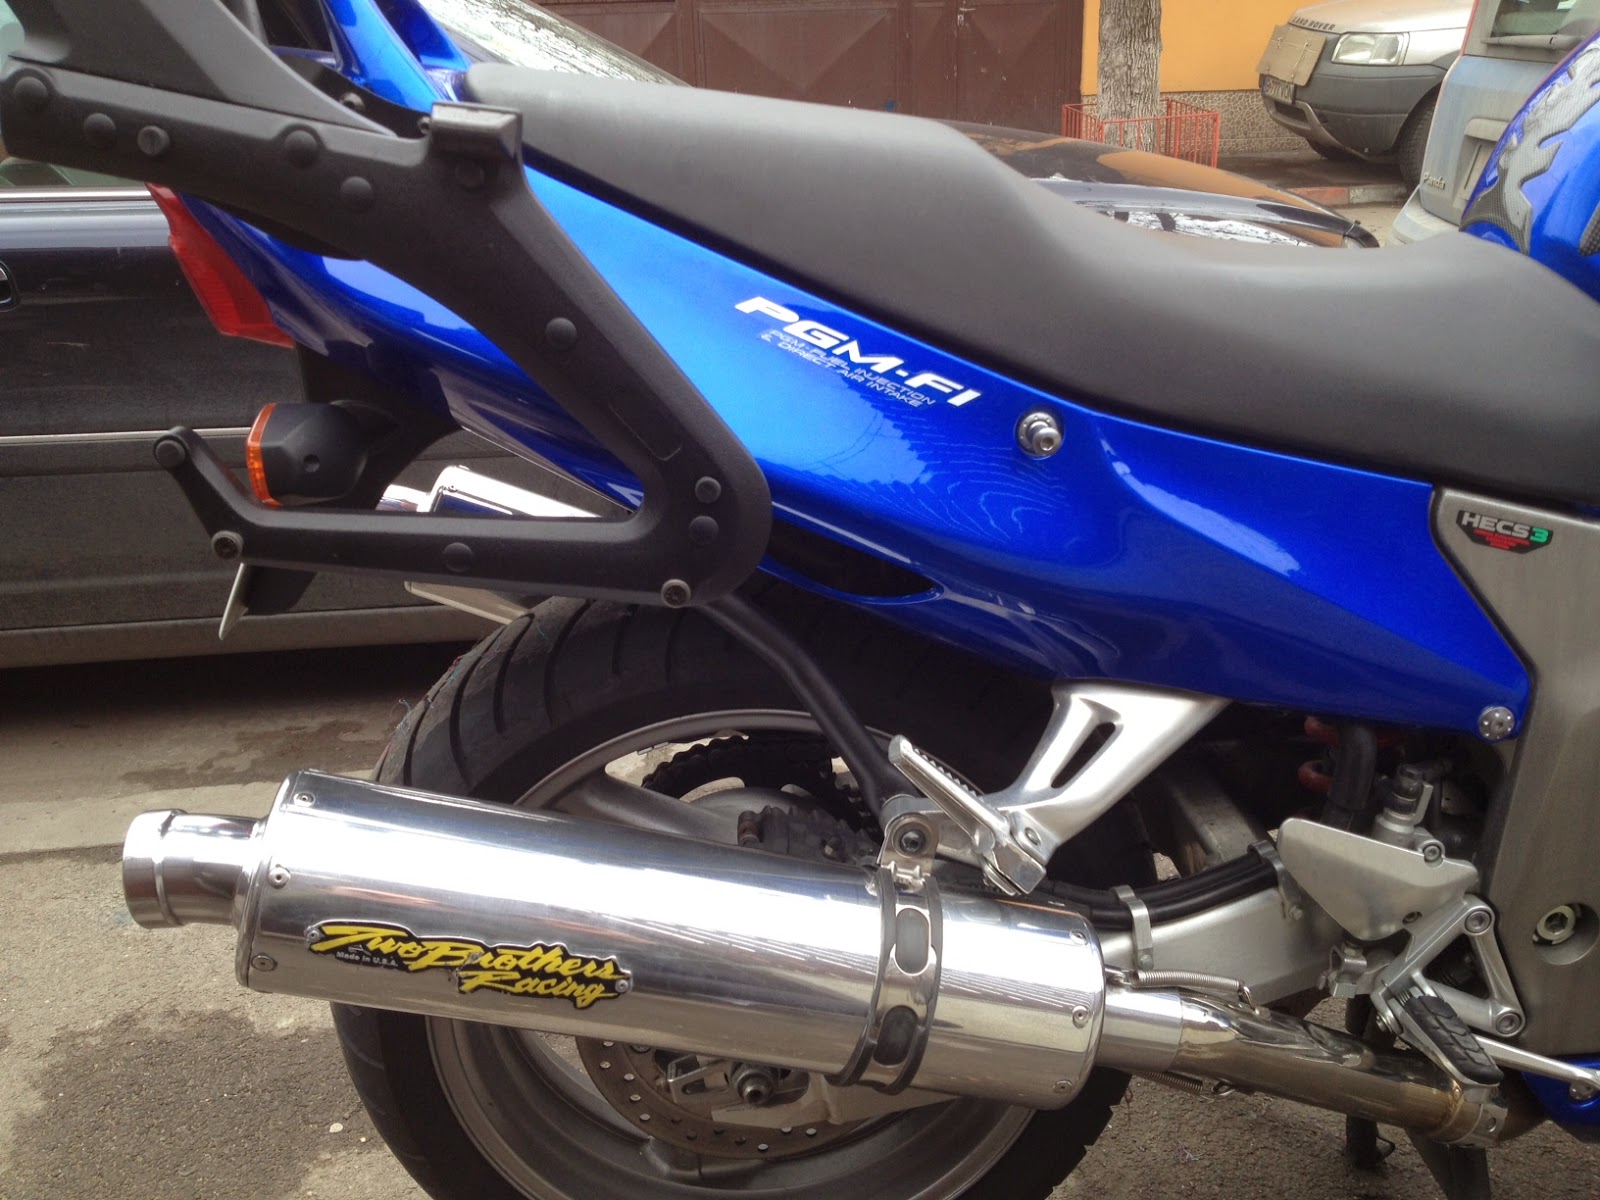 yamaha r1 blue 2004 Publicat de moto moto la 04:30 Niciun comentariu: